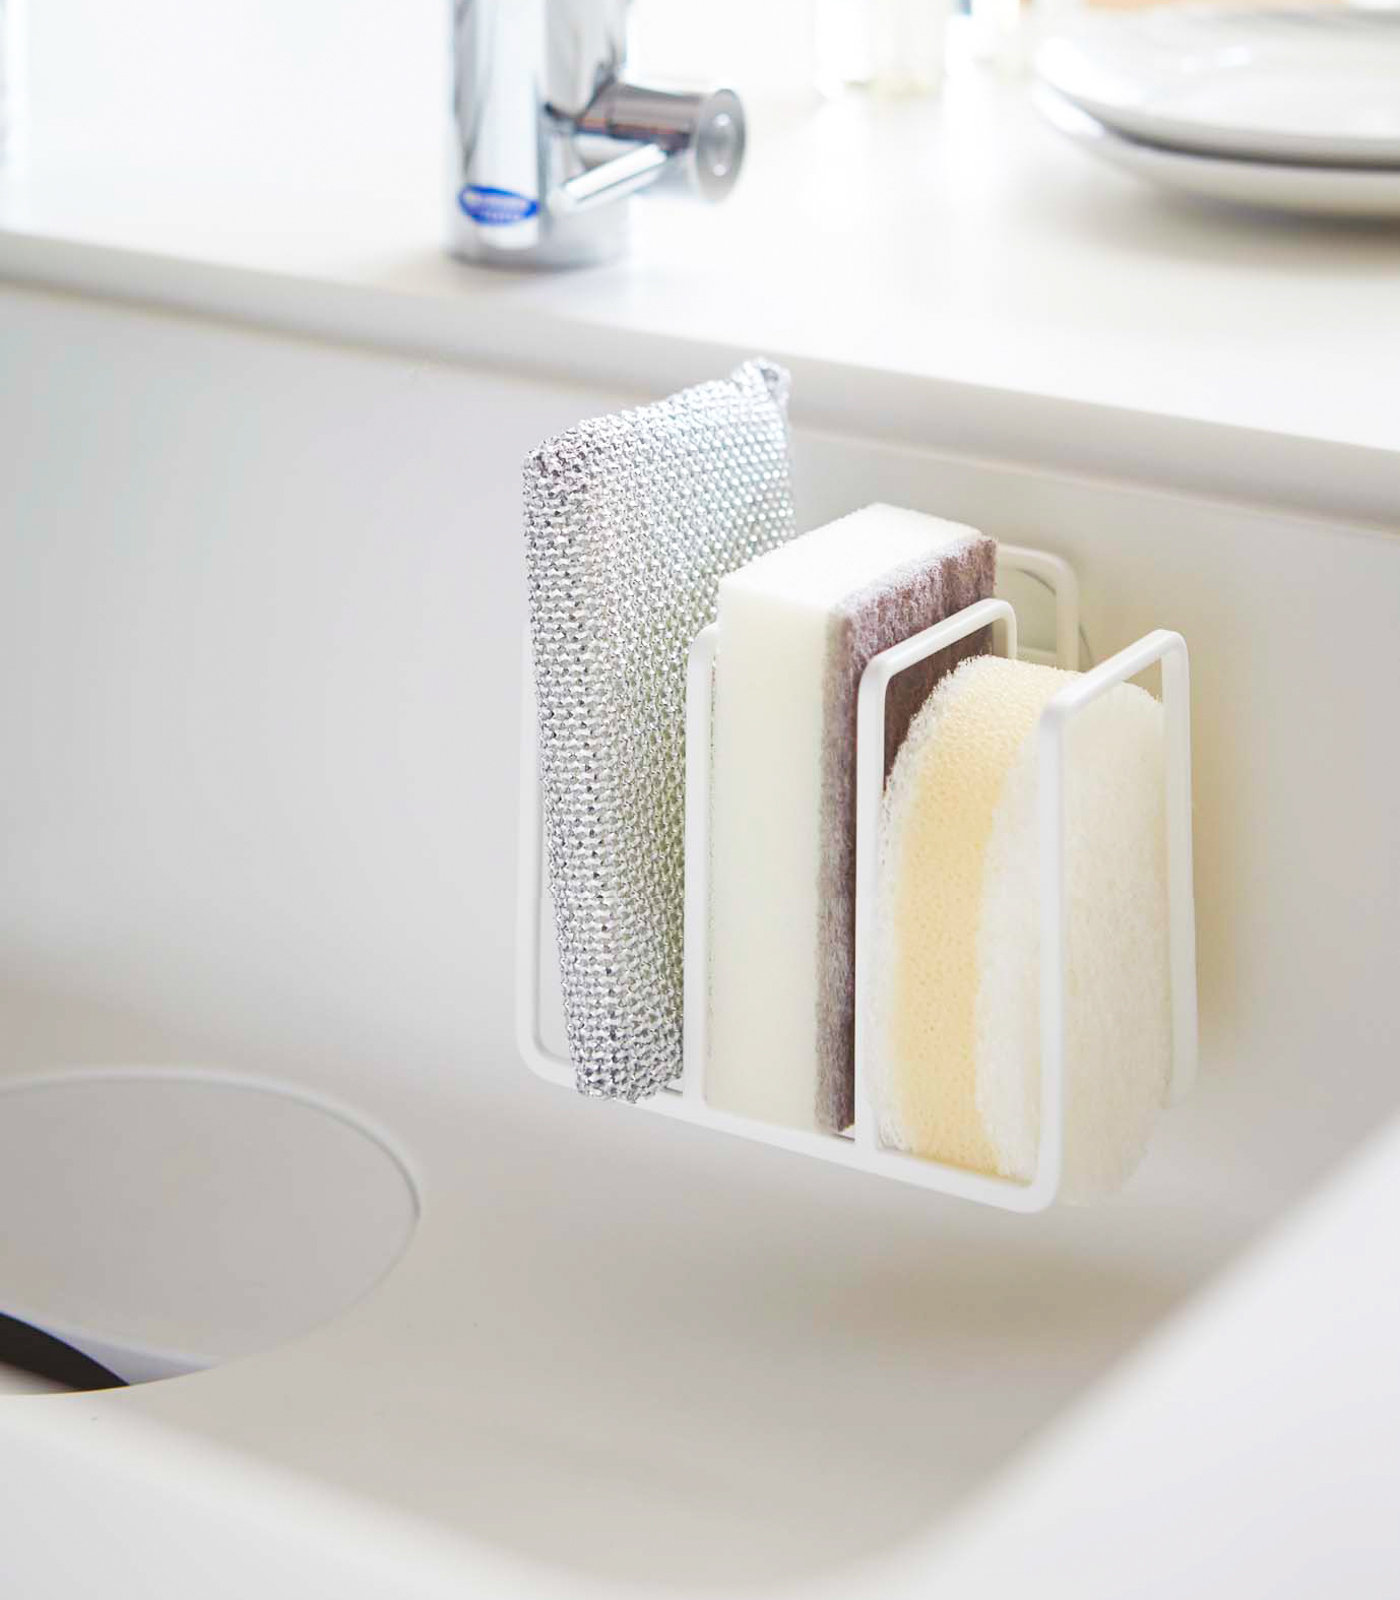 3pcs Kitchen Sink Tray, Self-draining Soap Dish, Silicone Sponge